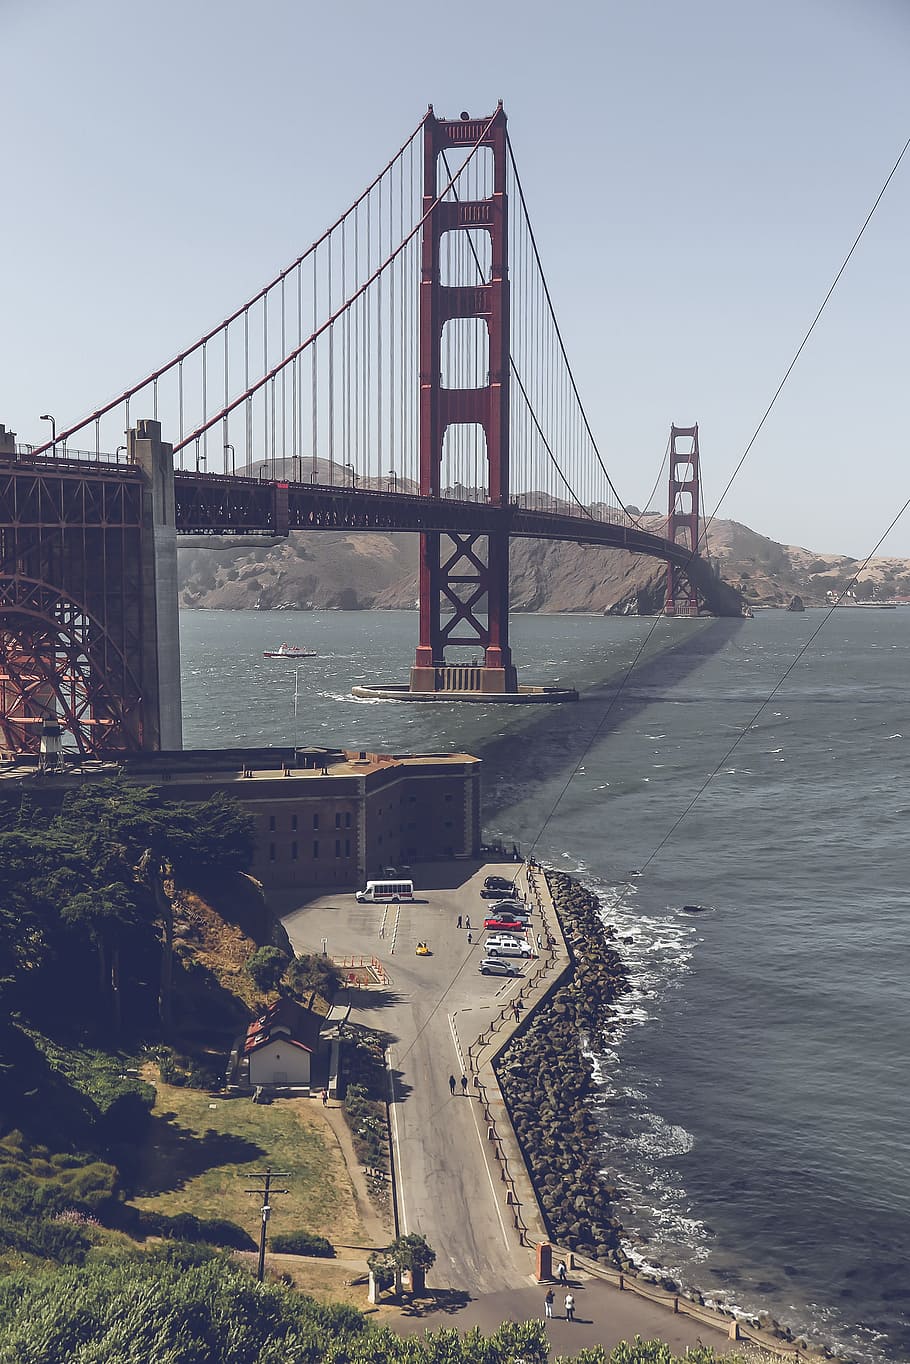 Ver, Golden, Gate Bridge, enfoque de estacionamiento, bahía, puente, California, Golden Gate, Golden Gate Bridge, estacionamiento